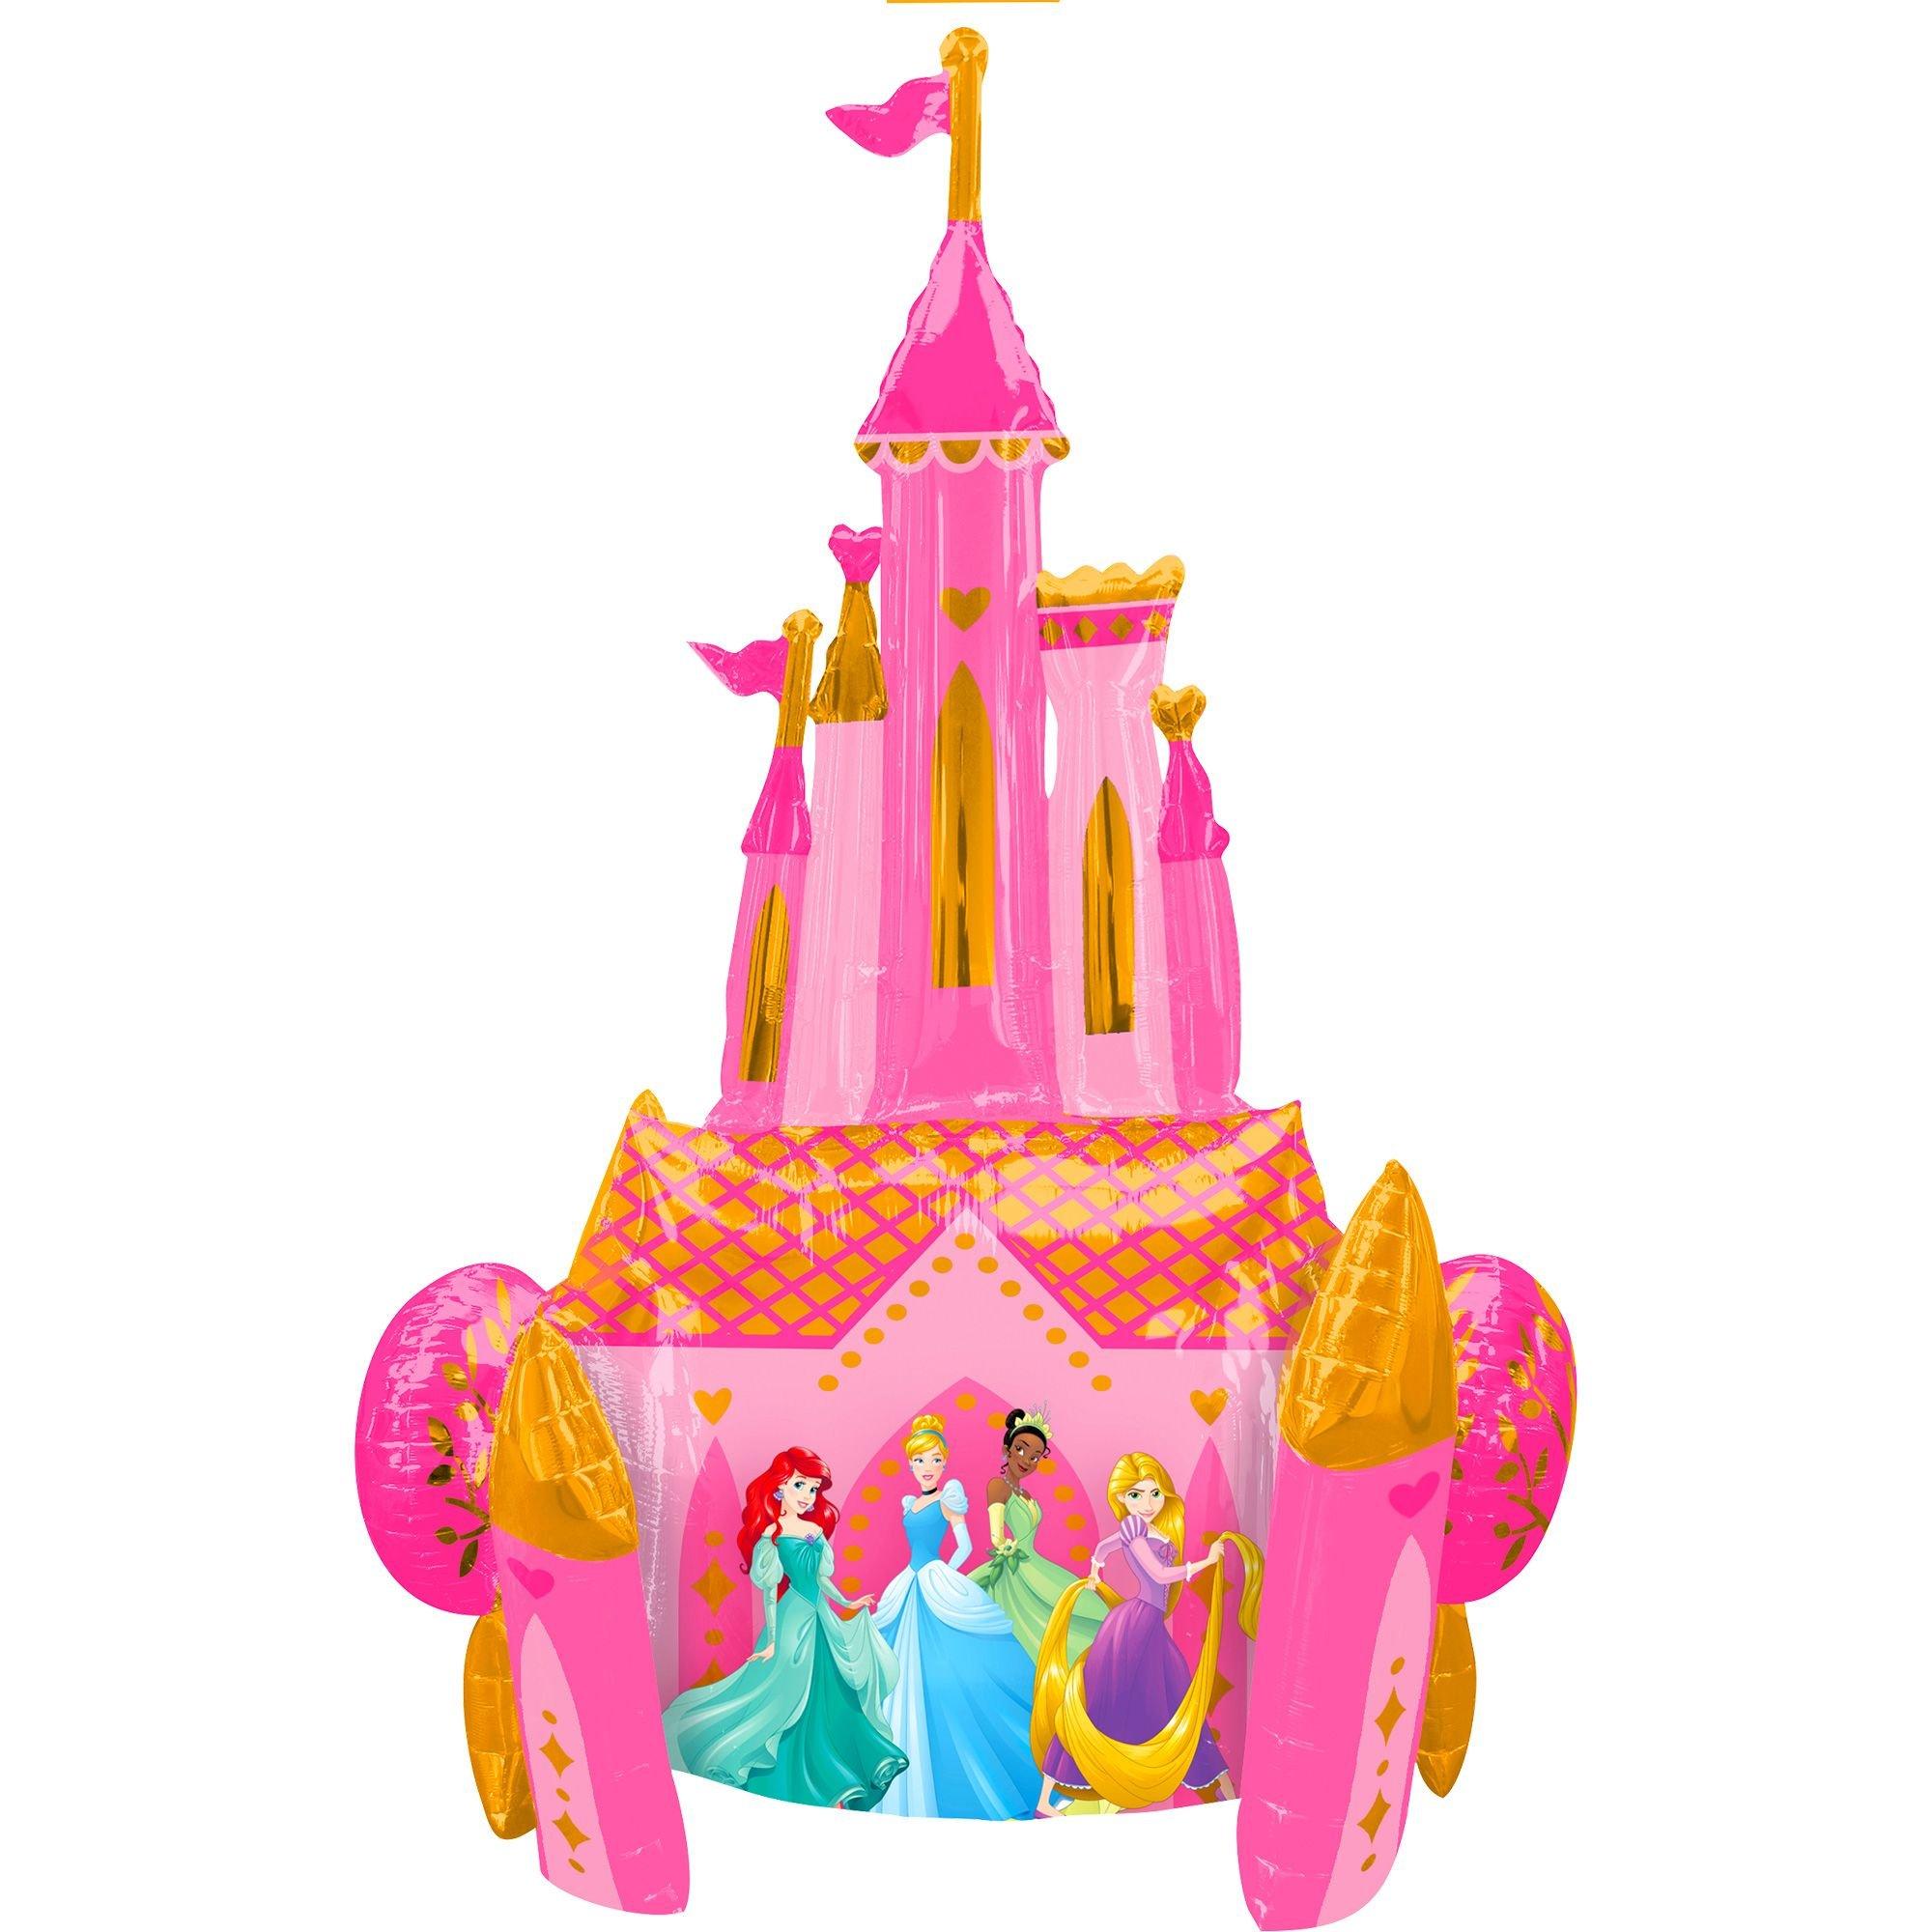 Ballon Disney princesse de 14 cm